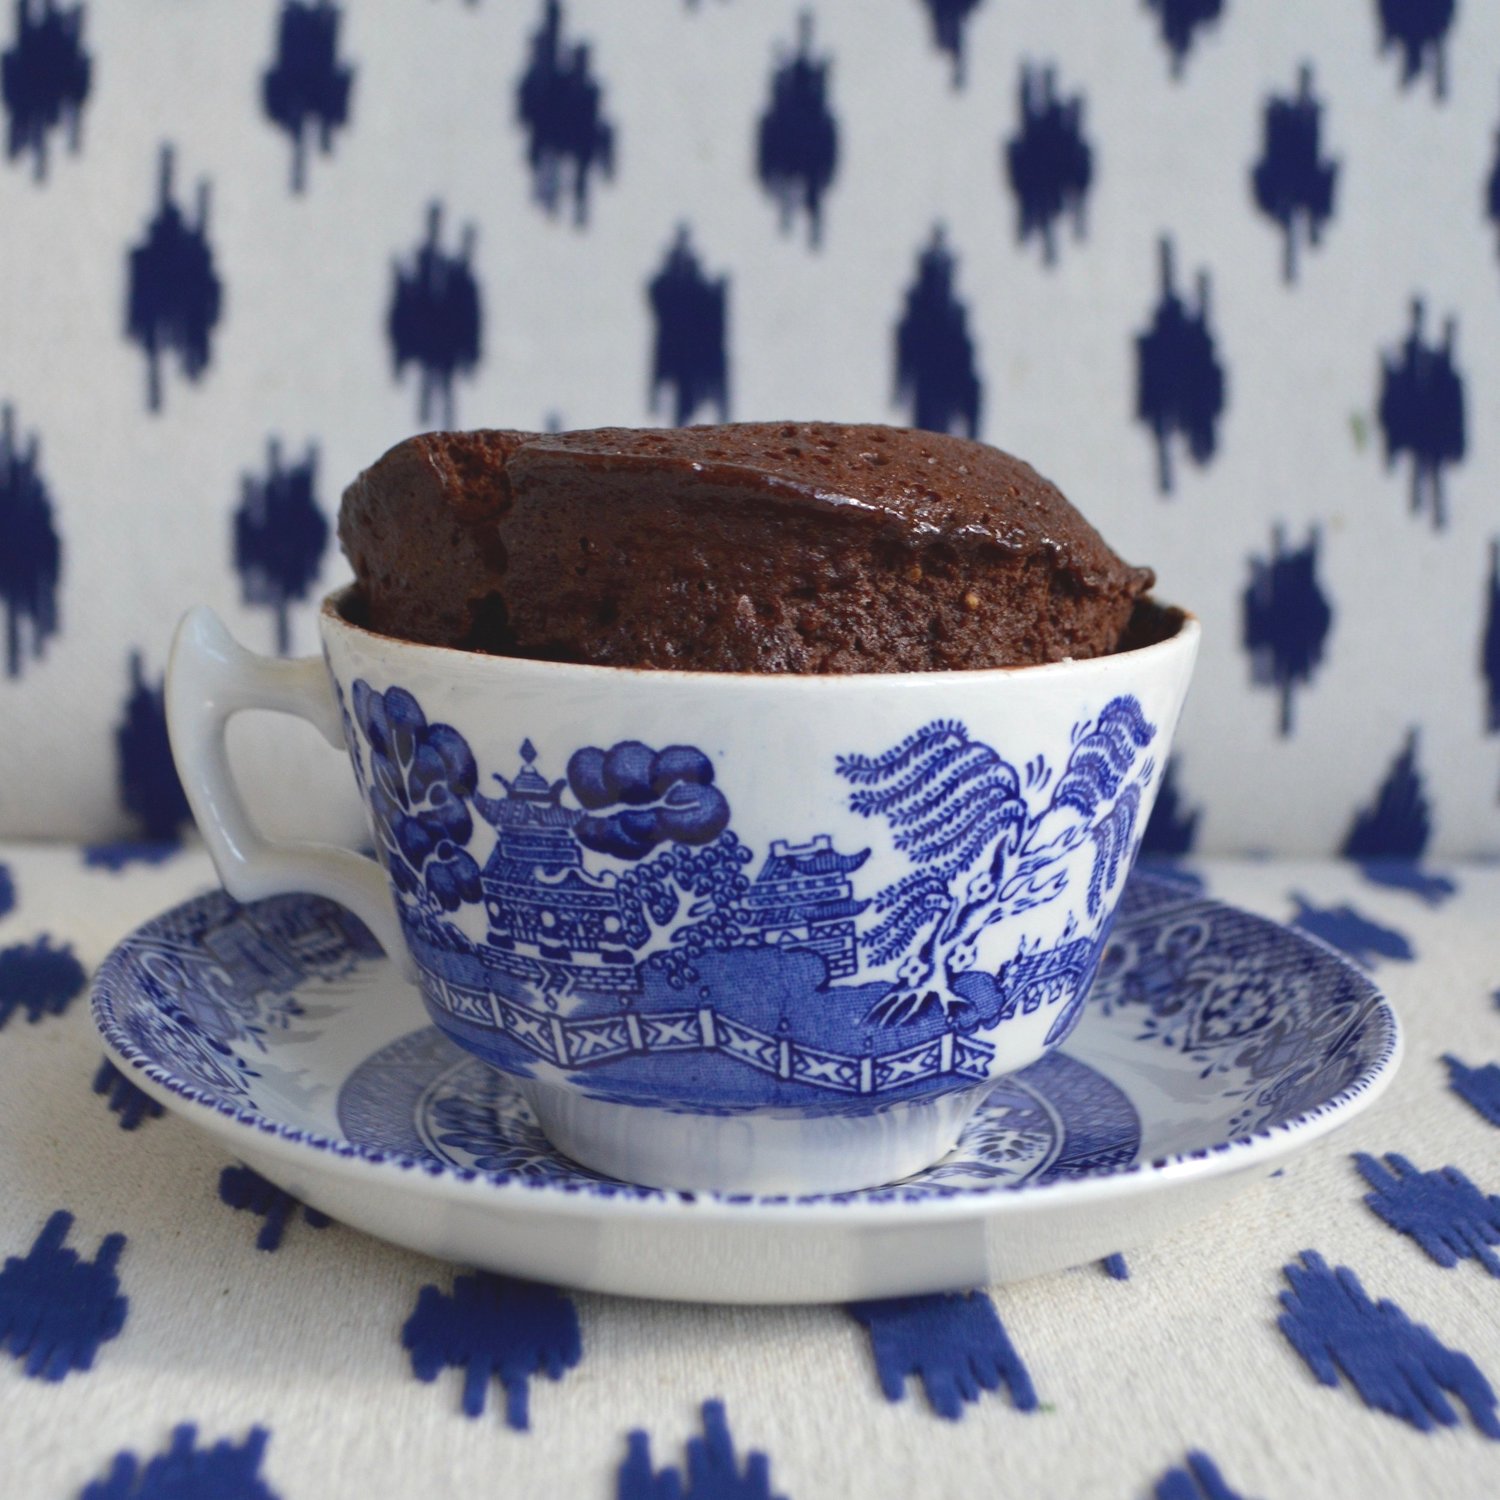 1-Minute Chocolate Teacup Cake